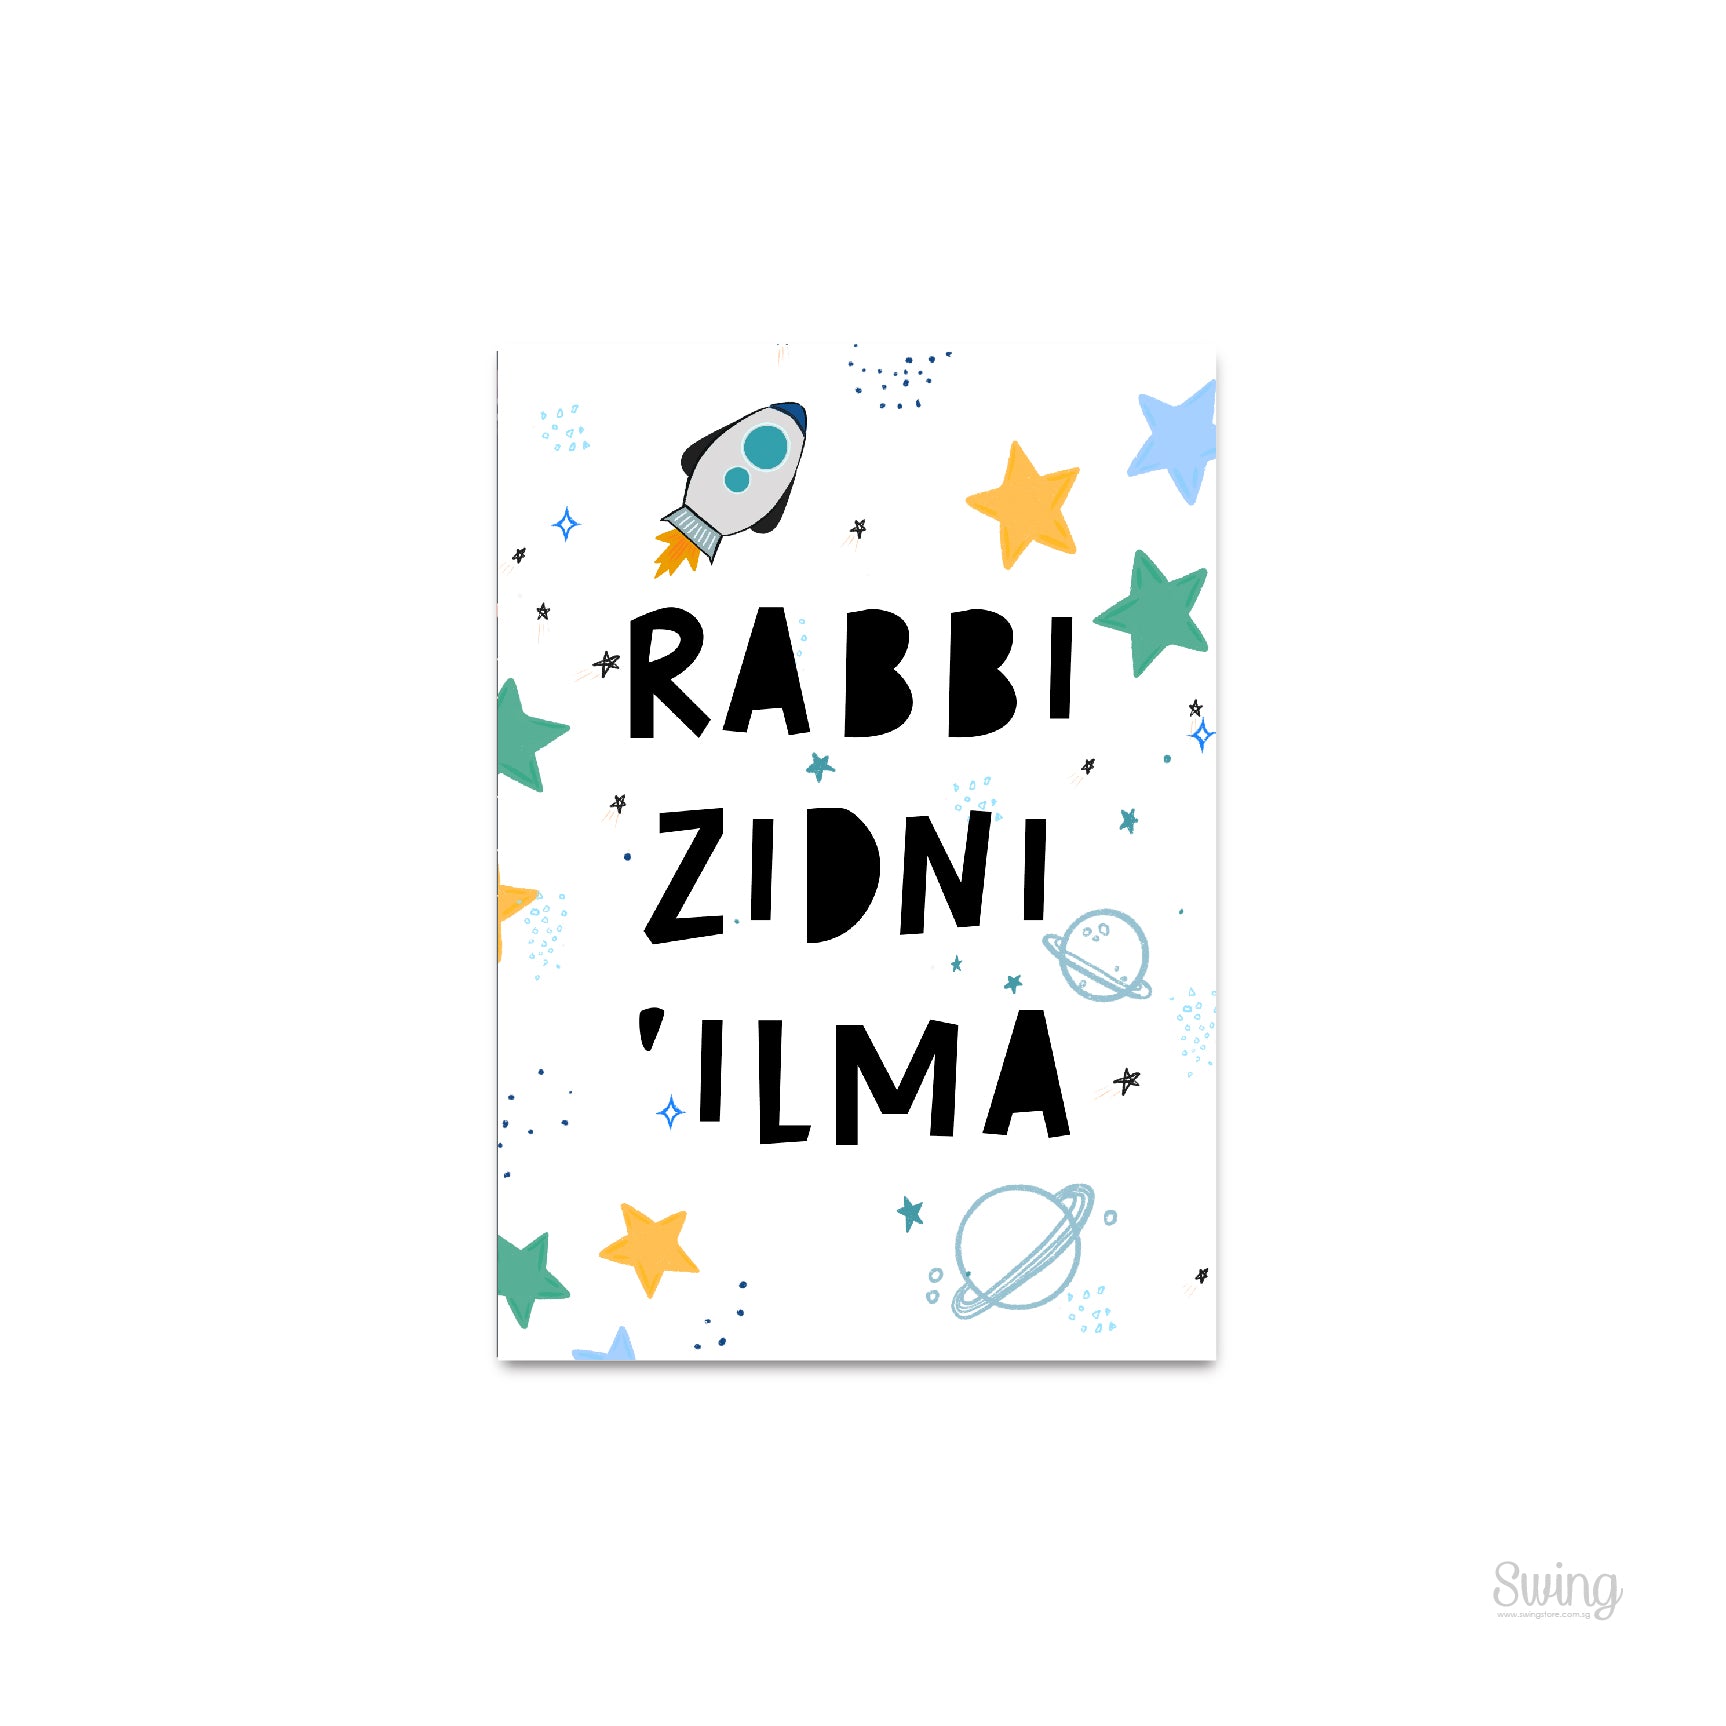 Rabbi Zidni Ilma (Rocket) - A4 White Capping